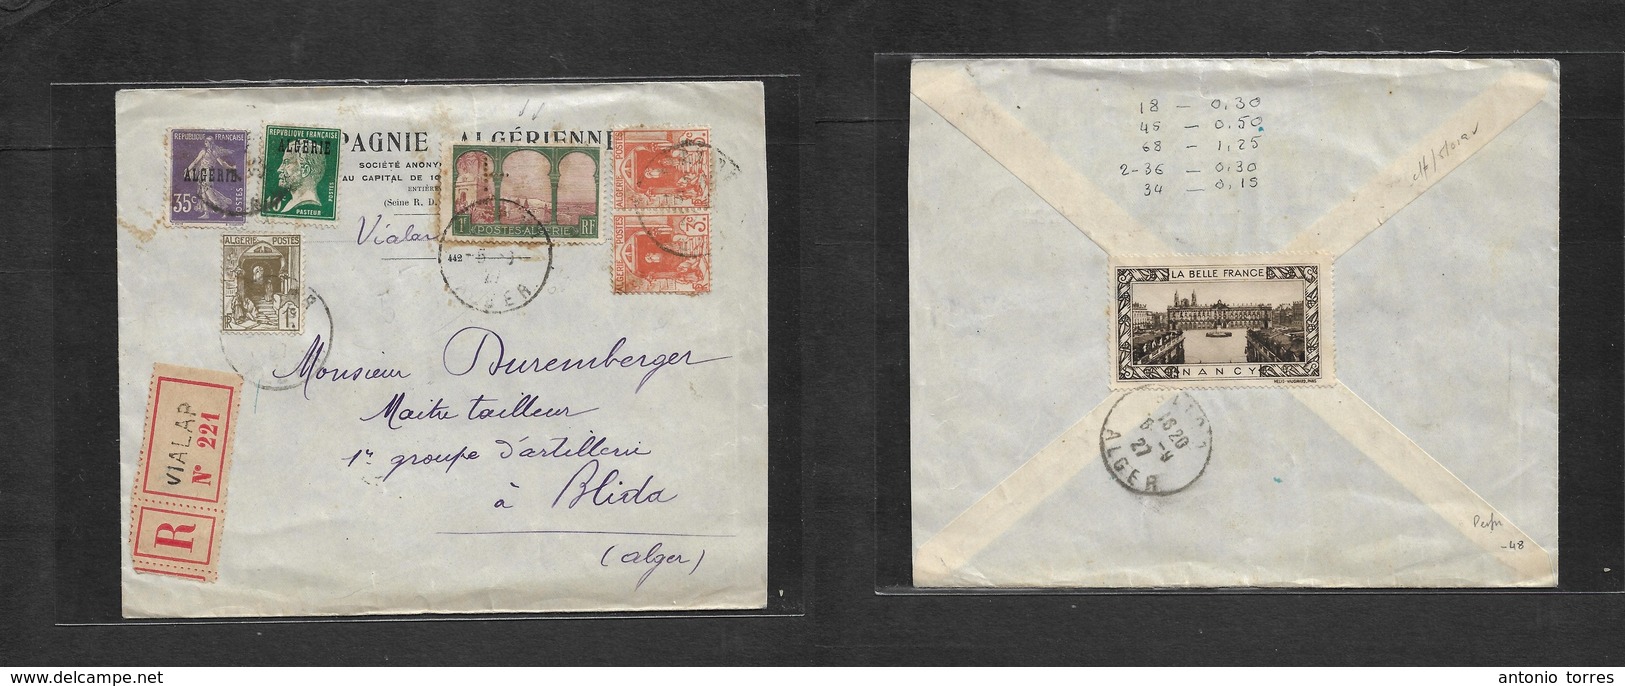 Algeria. 1927 (5 Sept)  Vialap - Blida. PERFIN Stamp Comercial Usage Ovptd Issue + Mixed. Registered Multifkd Envelope.  - Algerije (1962-...)